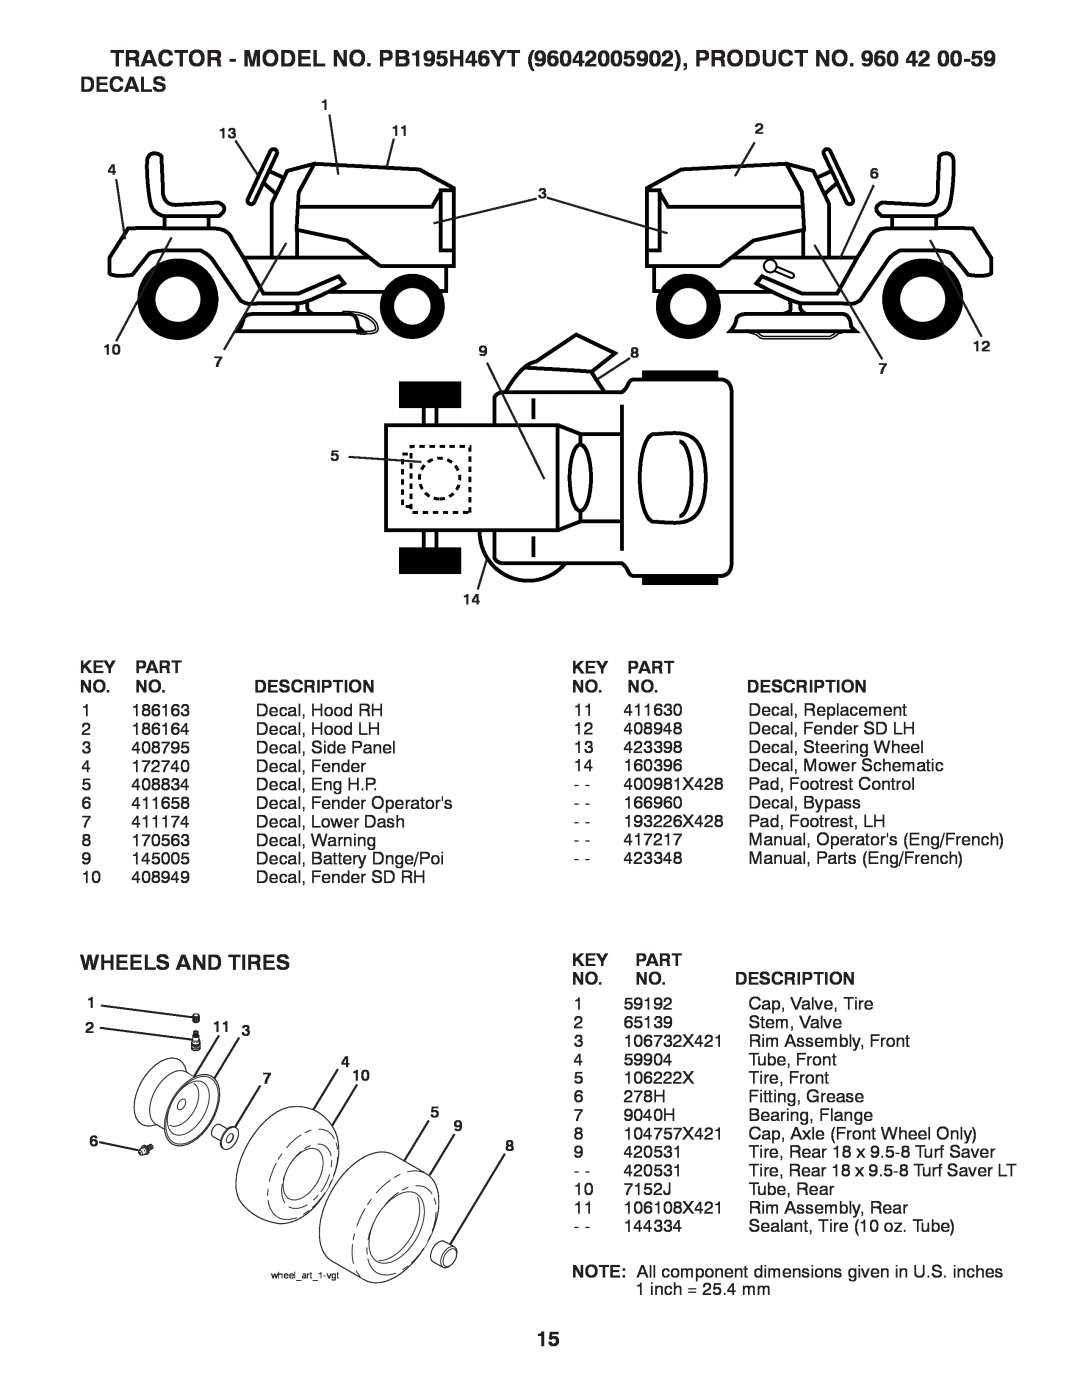 Poulan manual TRACTOR - MODEL NO. PB195H46YT 96042005902, PRODUCT NO. 960 42, wheelart1-vgt 